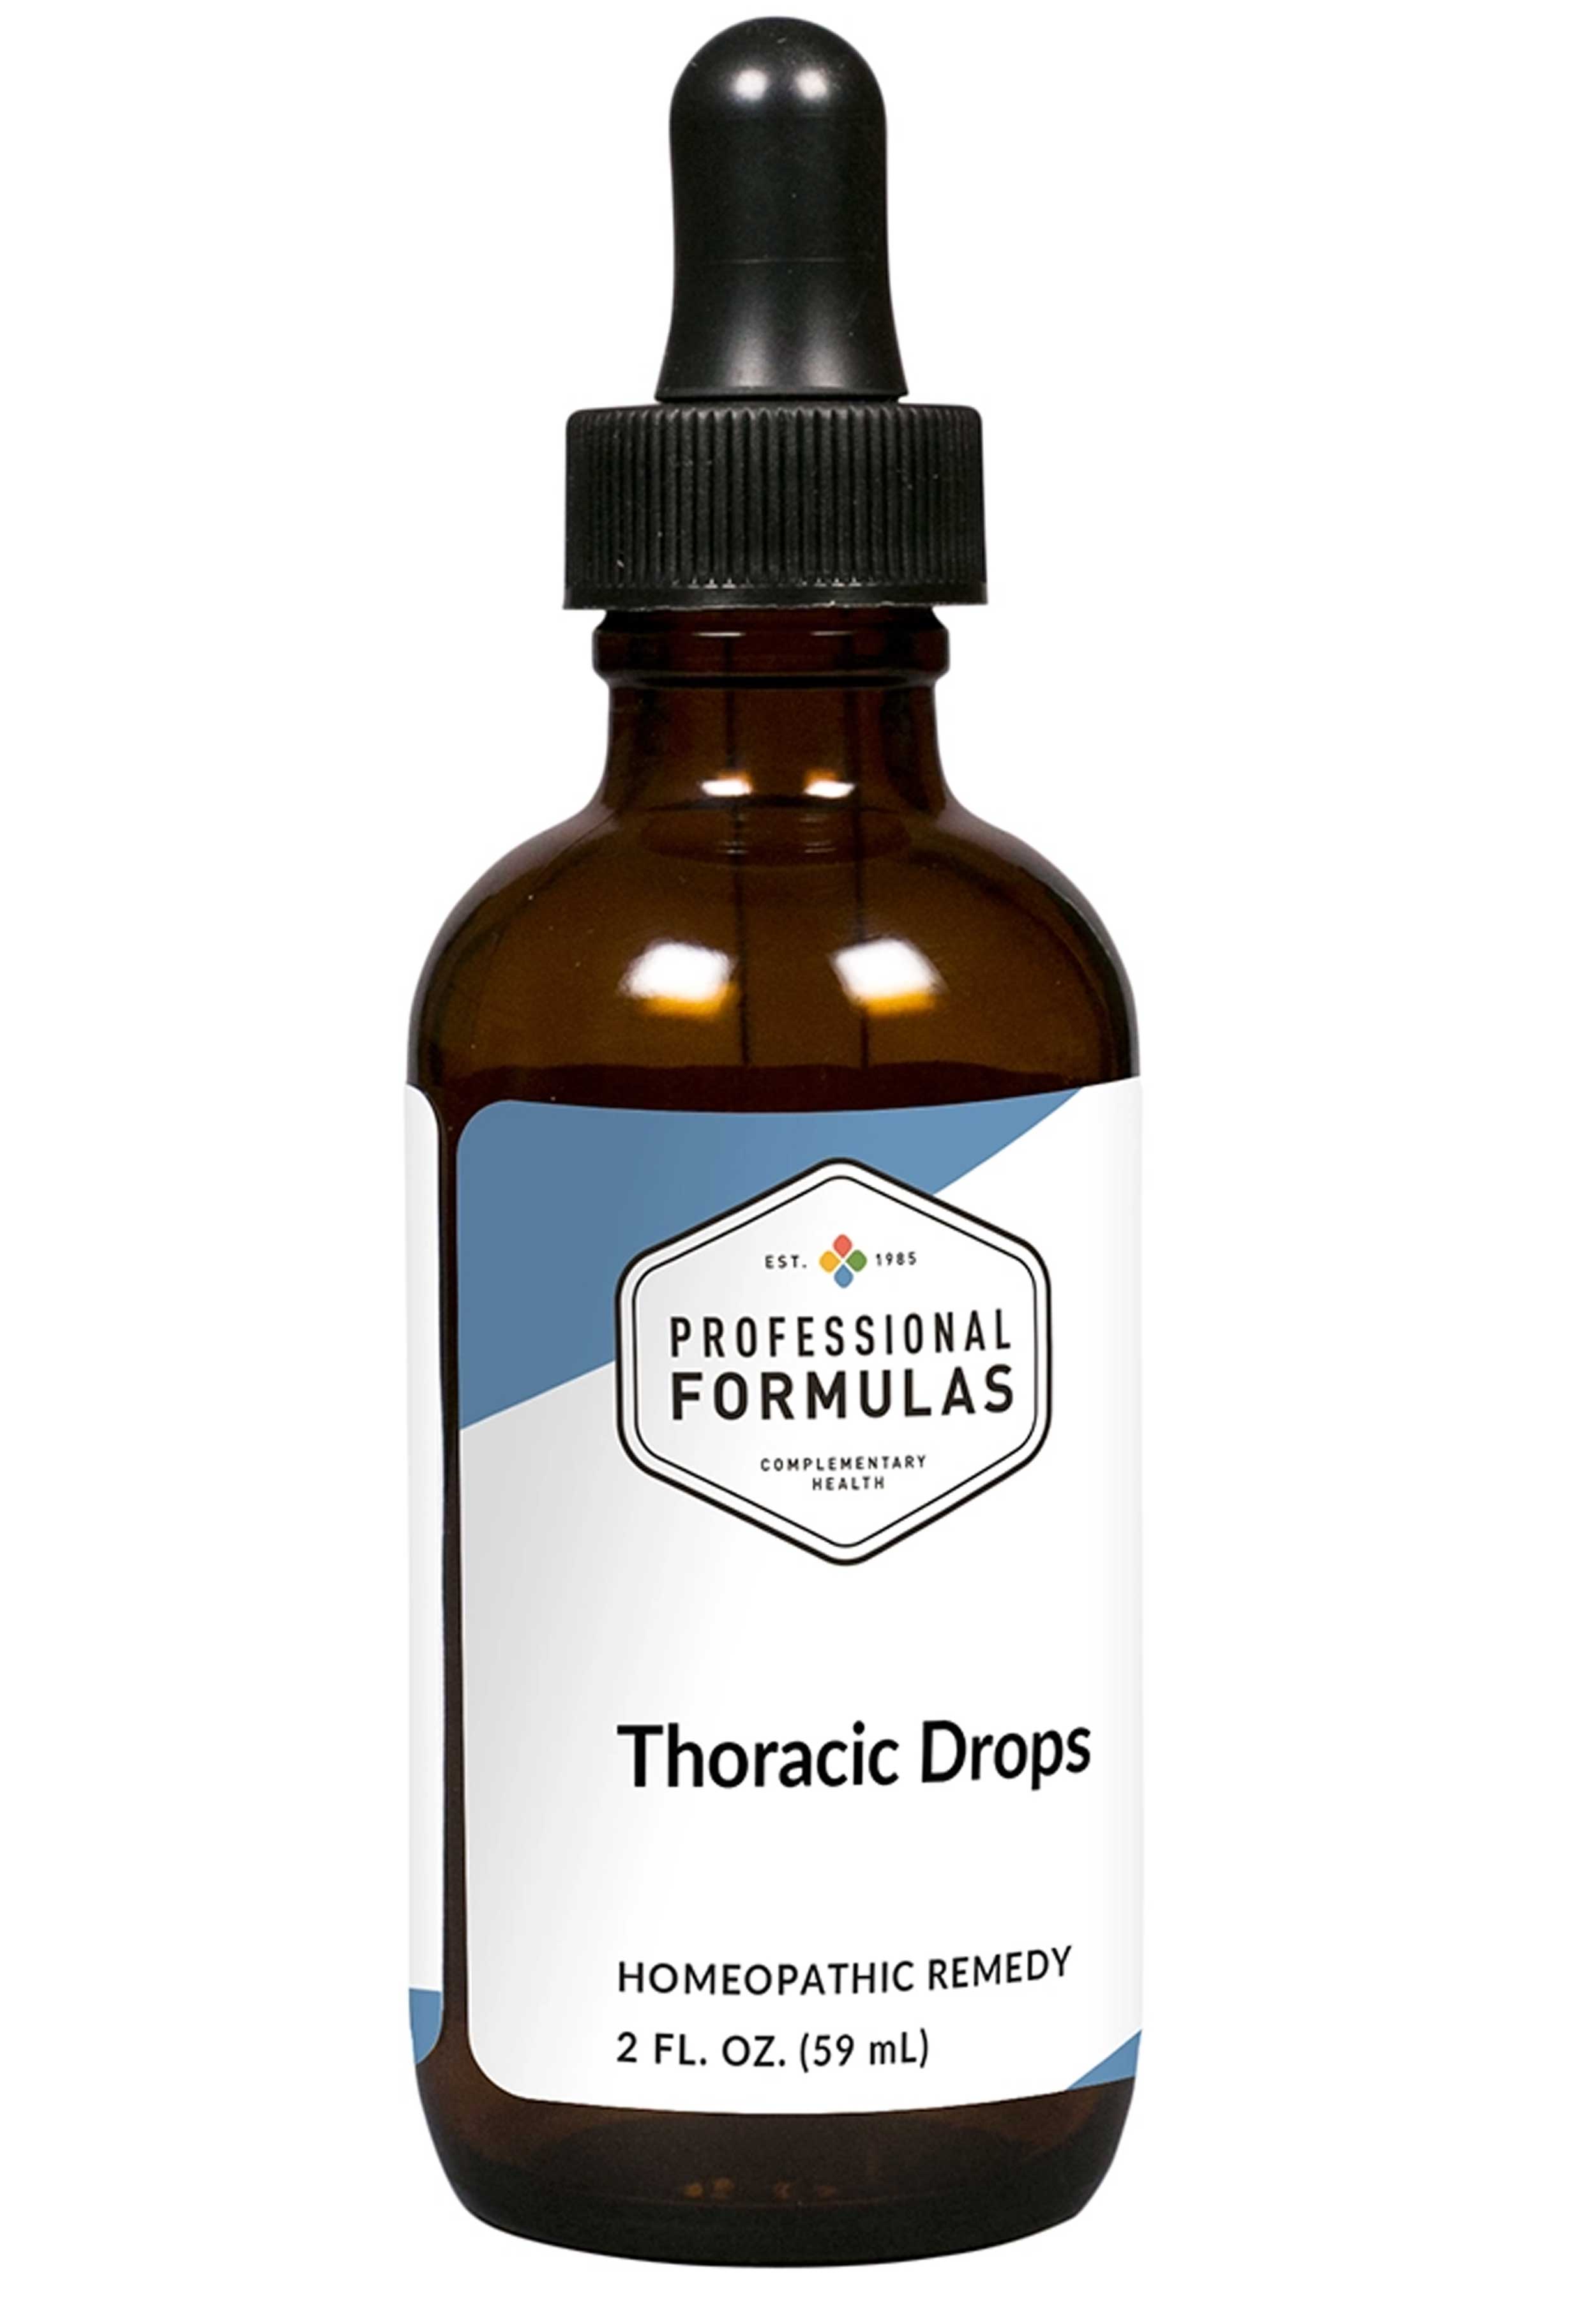 Professional Formulas Thoracic Drops